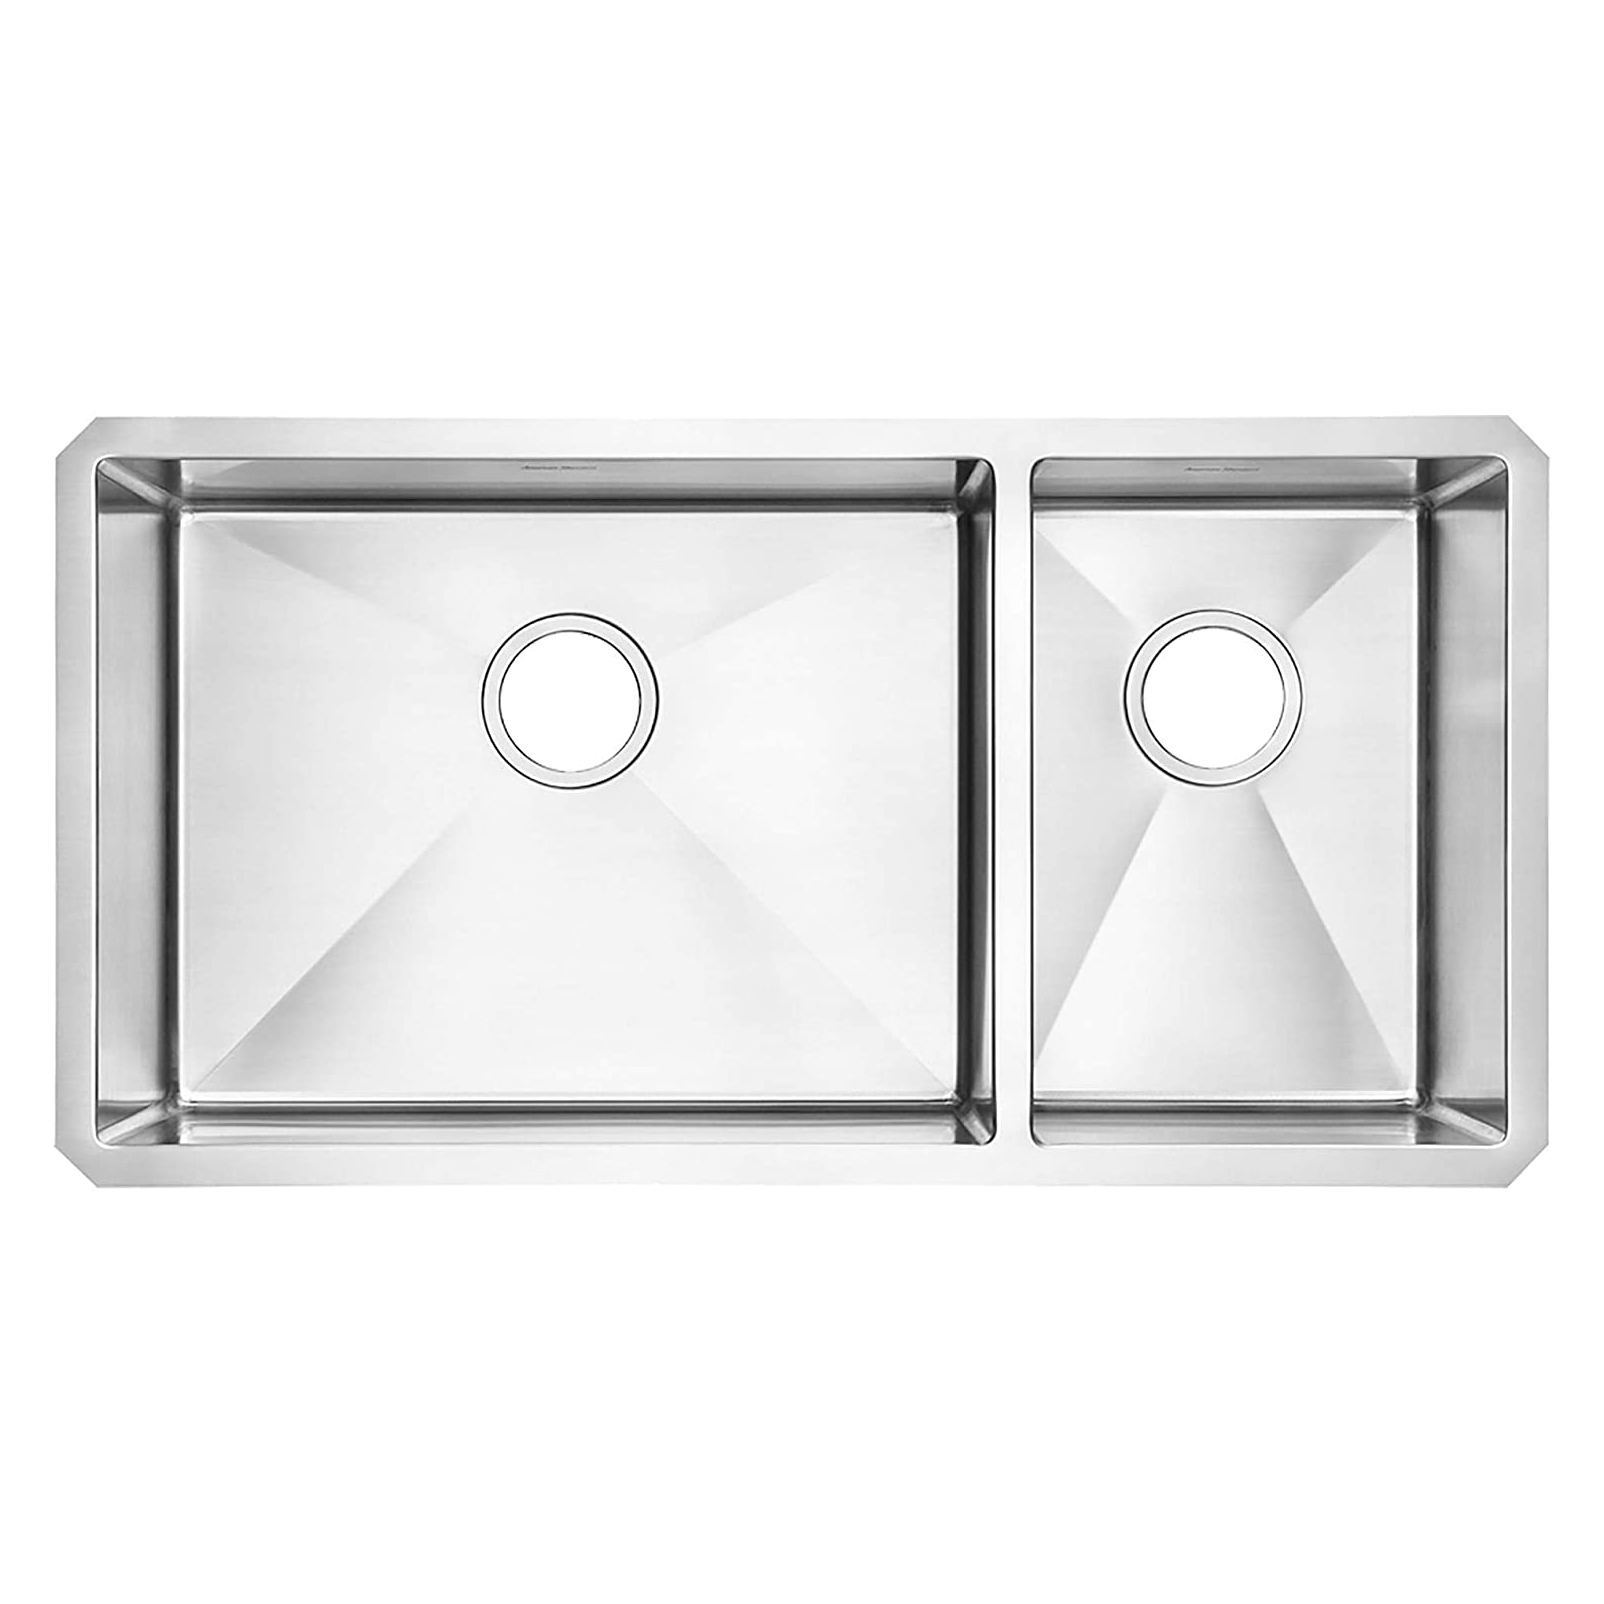 Pekoe 35x18x9" Stainless Steel Offset 2-Bowl Kitchen Sink